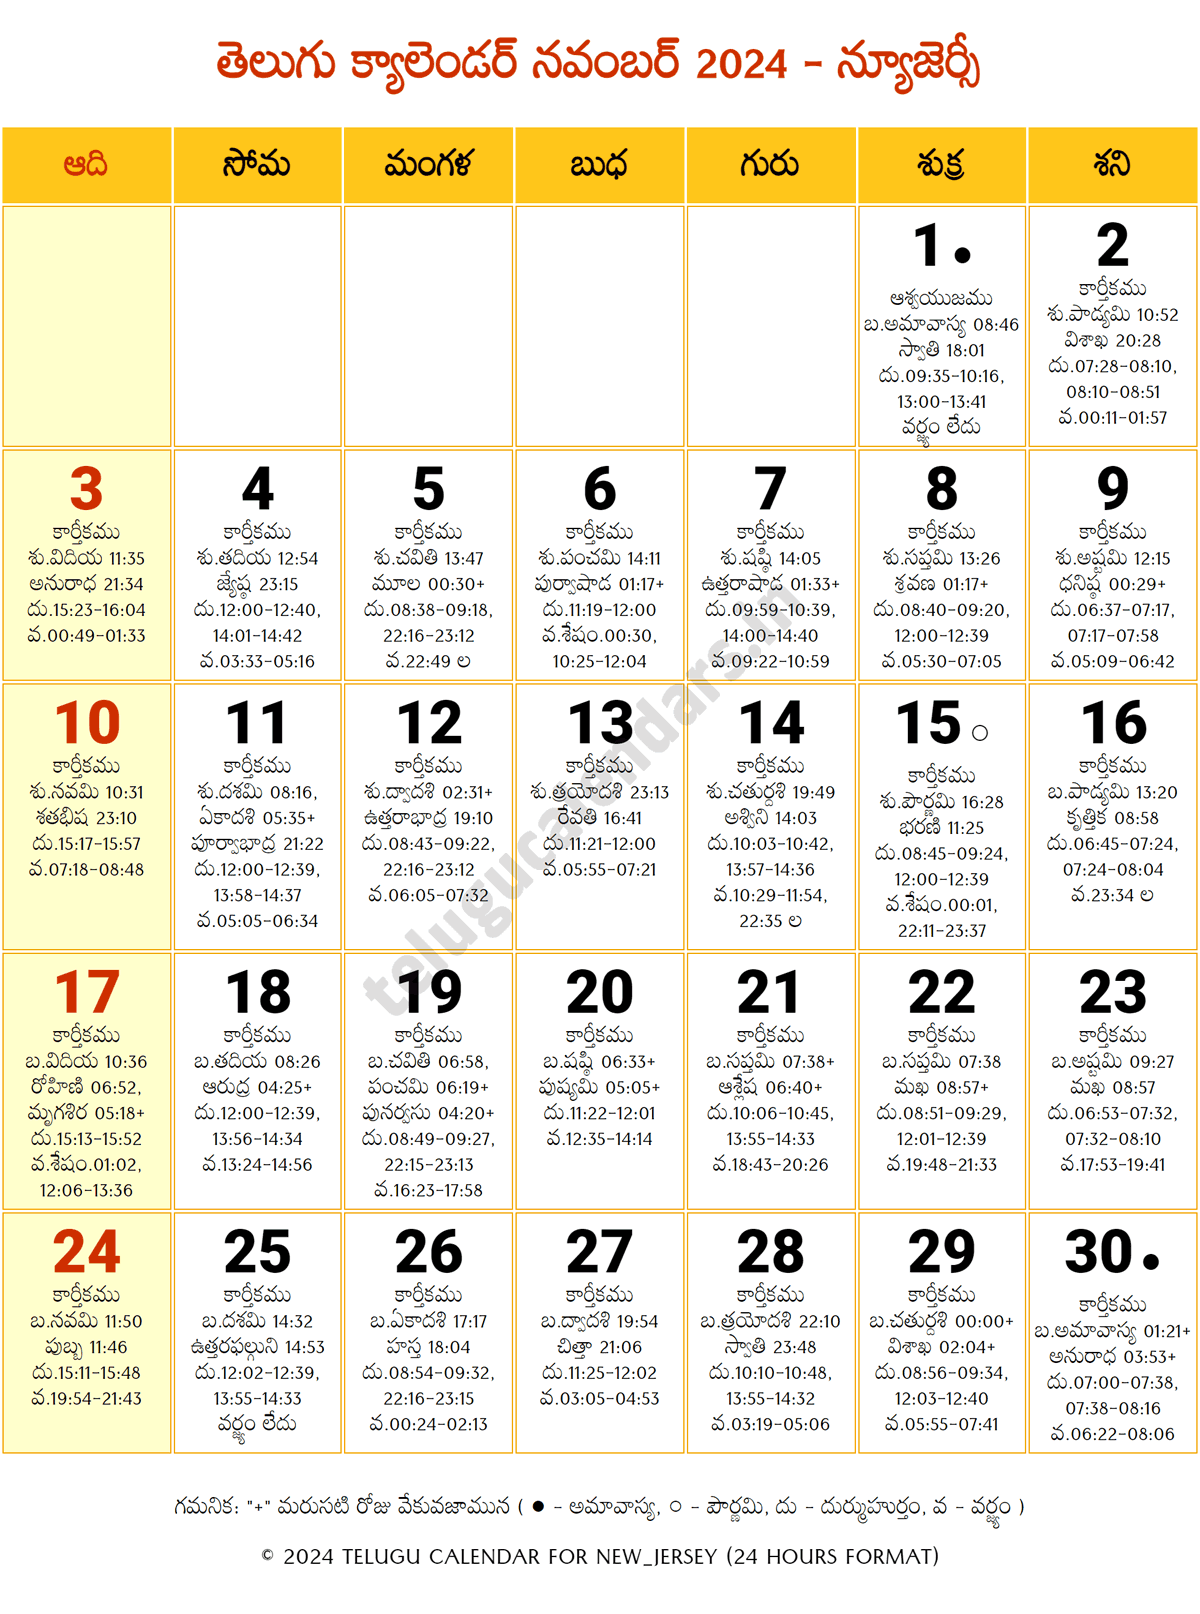 New Jersey 2024 Telugu Calendar November